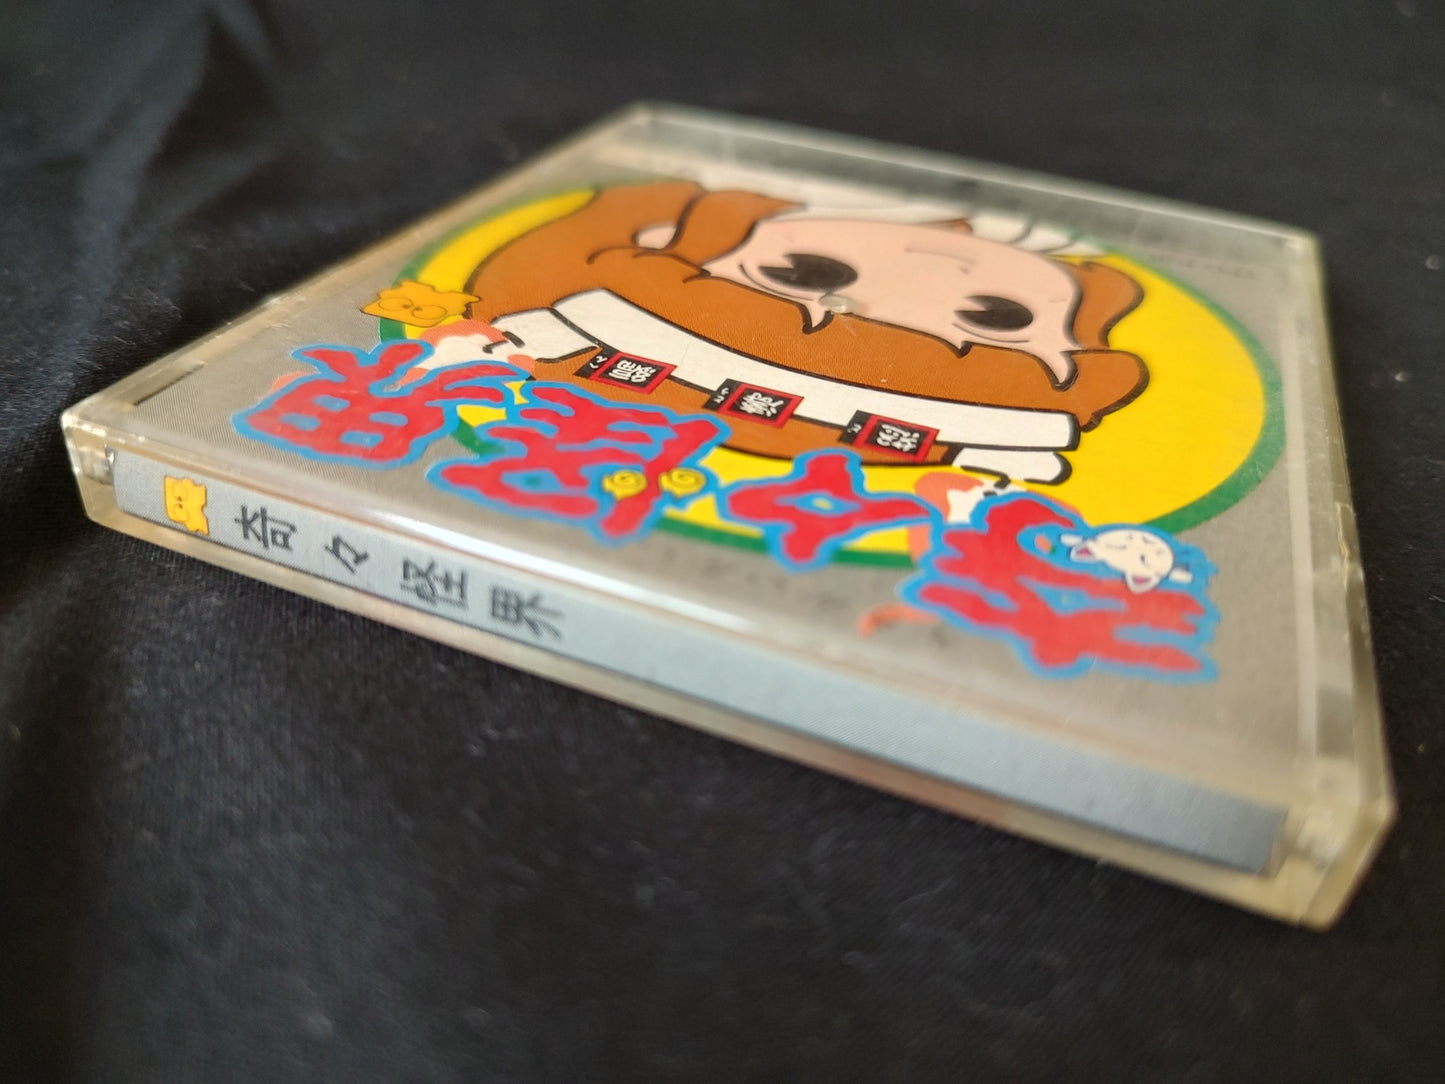 KIKIKAIKAI (KIKI KAIKAI) FAMICOM (NES) Disk System, Game disk set, tested-f0515-